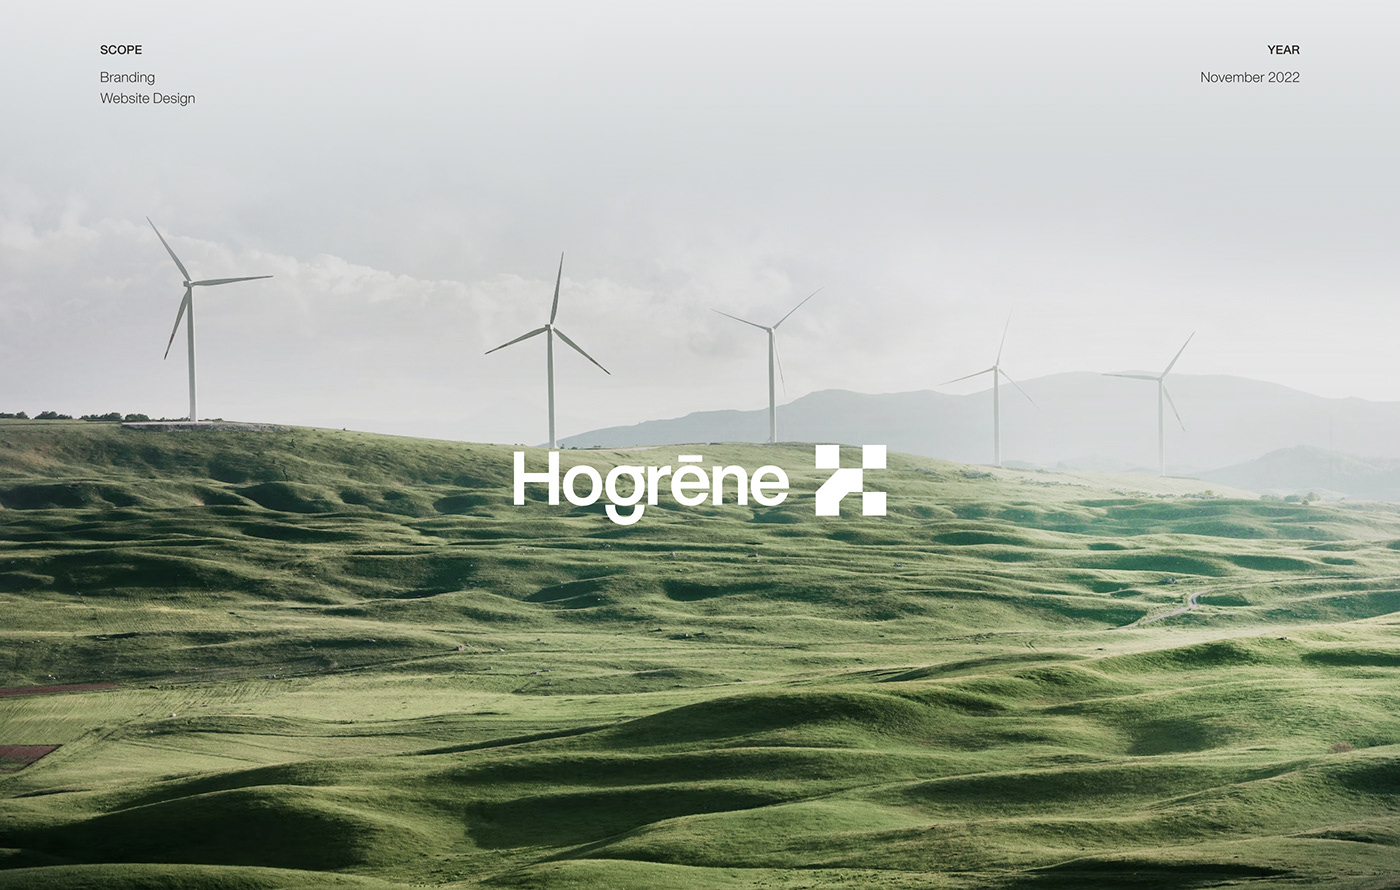 Hogrene case study by Uniko studio. Cover image